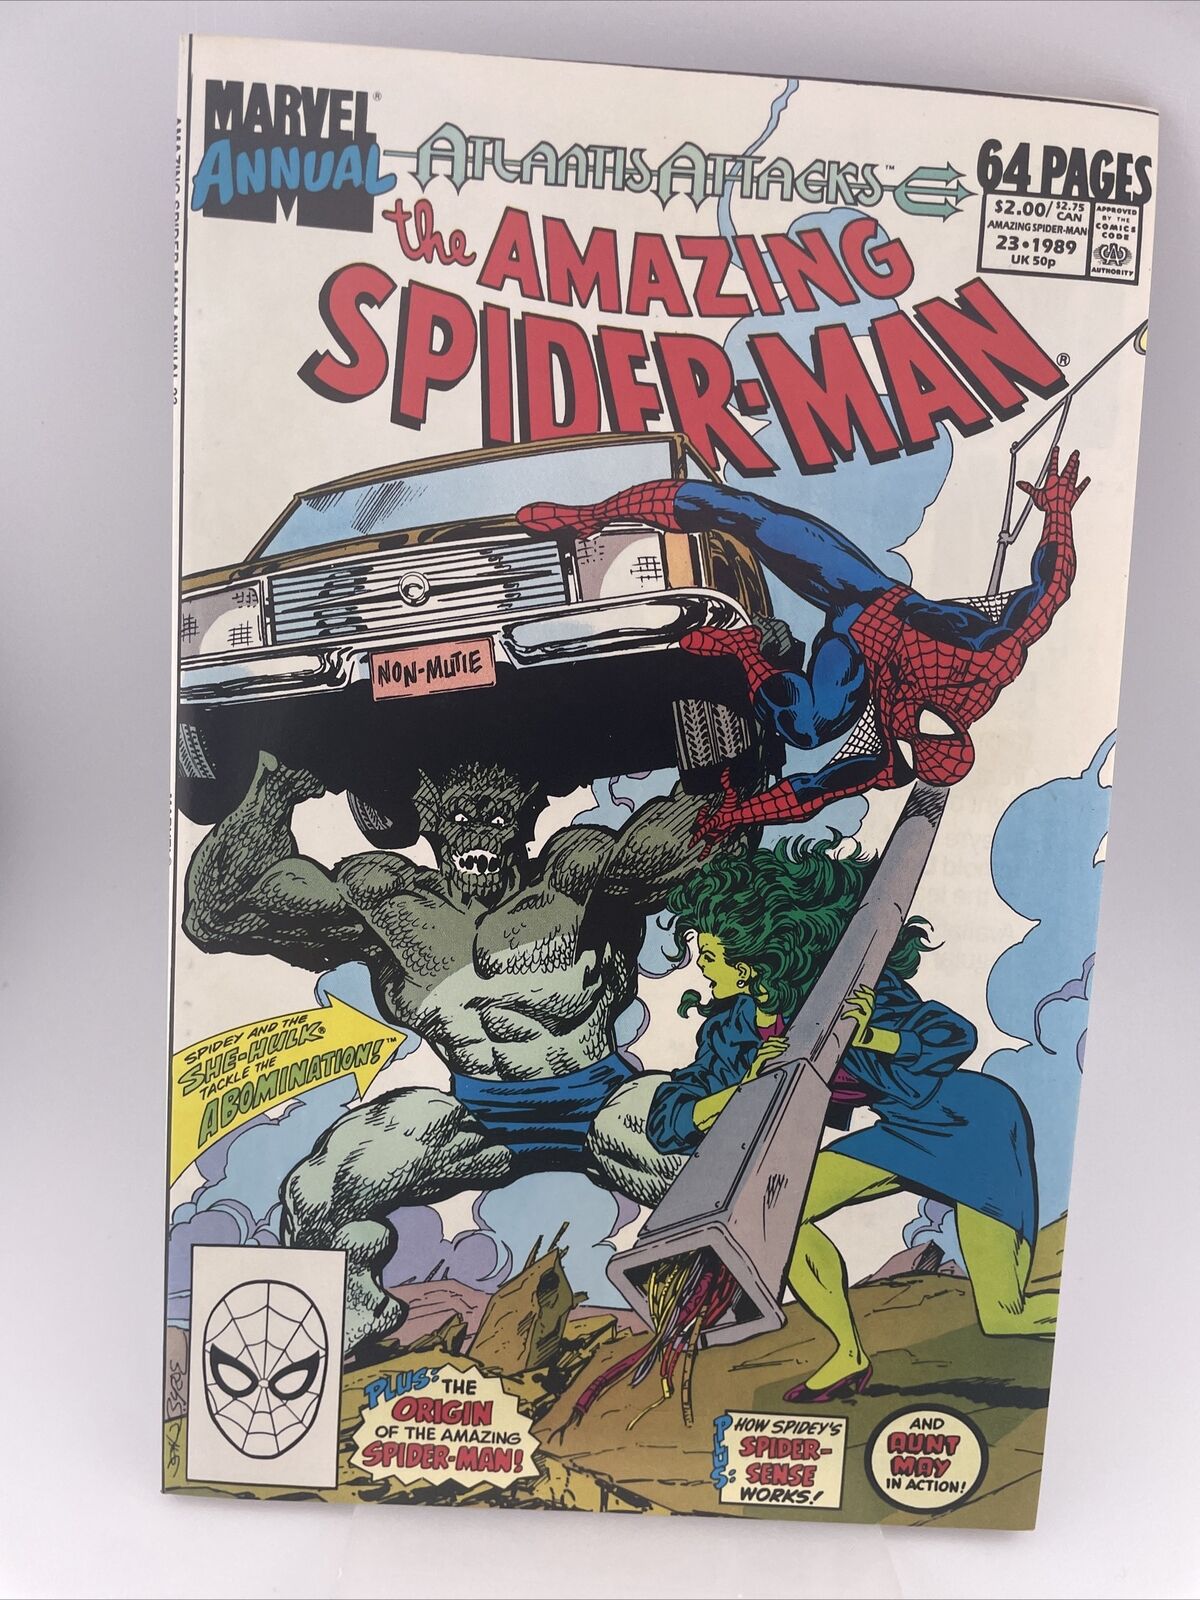 The Amazing Spider-Man Annual #23 Atlantis Attacks; 1989 She-Hulk Abomination